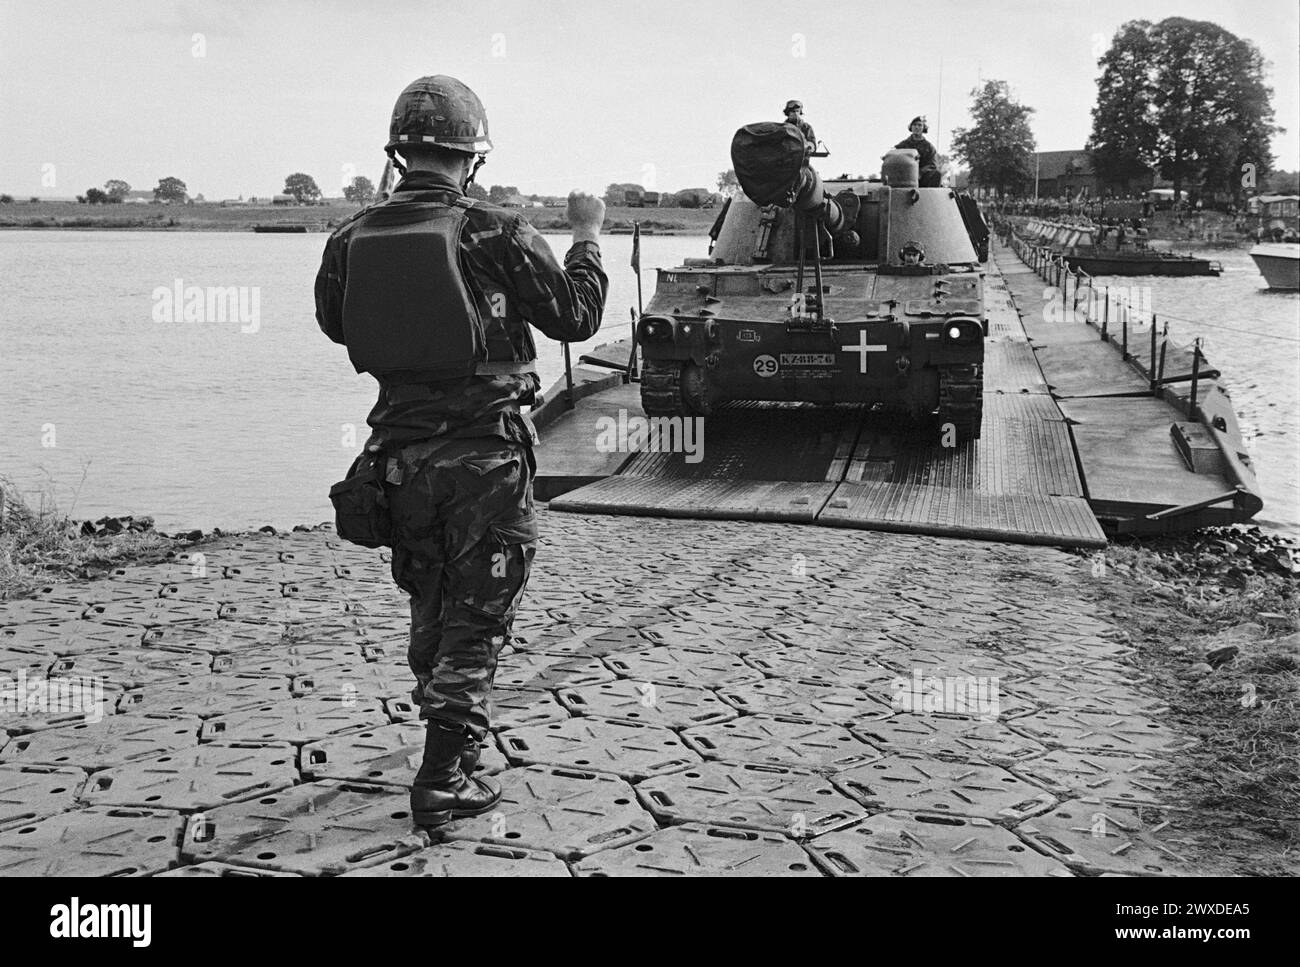 - Exercices de l'OTAN en Hollande, US Army M 109 canon automoteur traverser un pont ponton sur la Meuse (octobre 1983) - esercitazioni NATO in Olanda, Cannone semovente M 109 dell'US Army attraversa un ponte di barche sul fiume Mosa (ottobre 1983) Banque D'Images